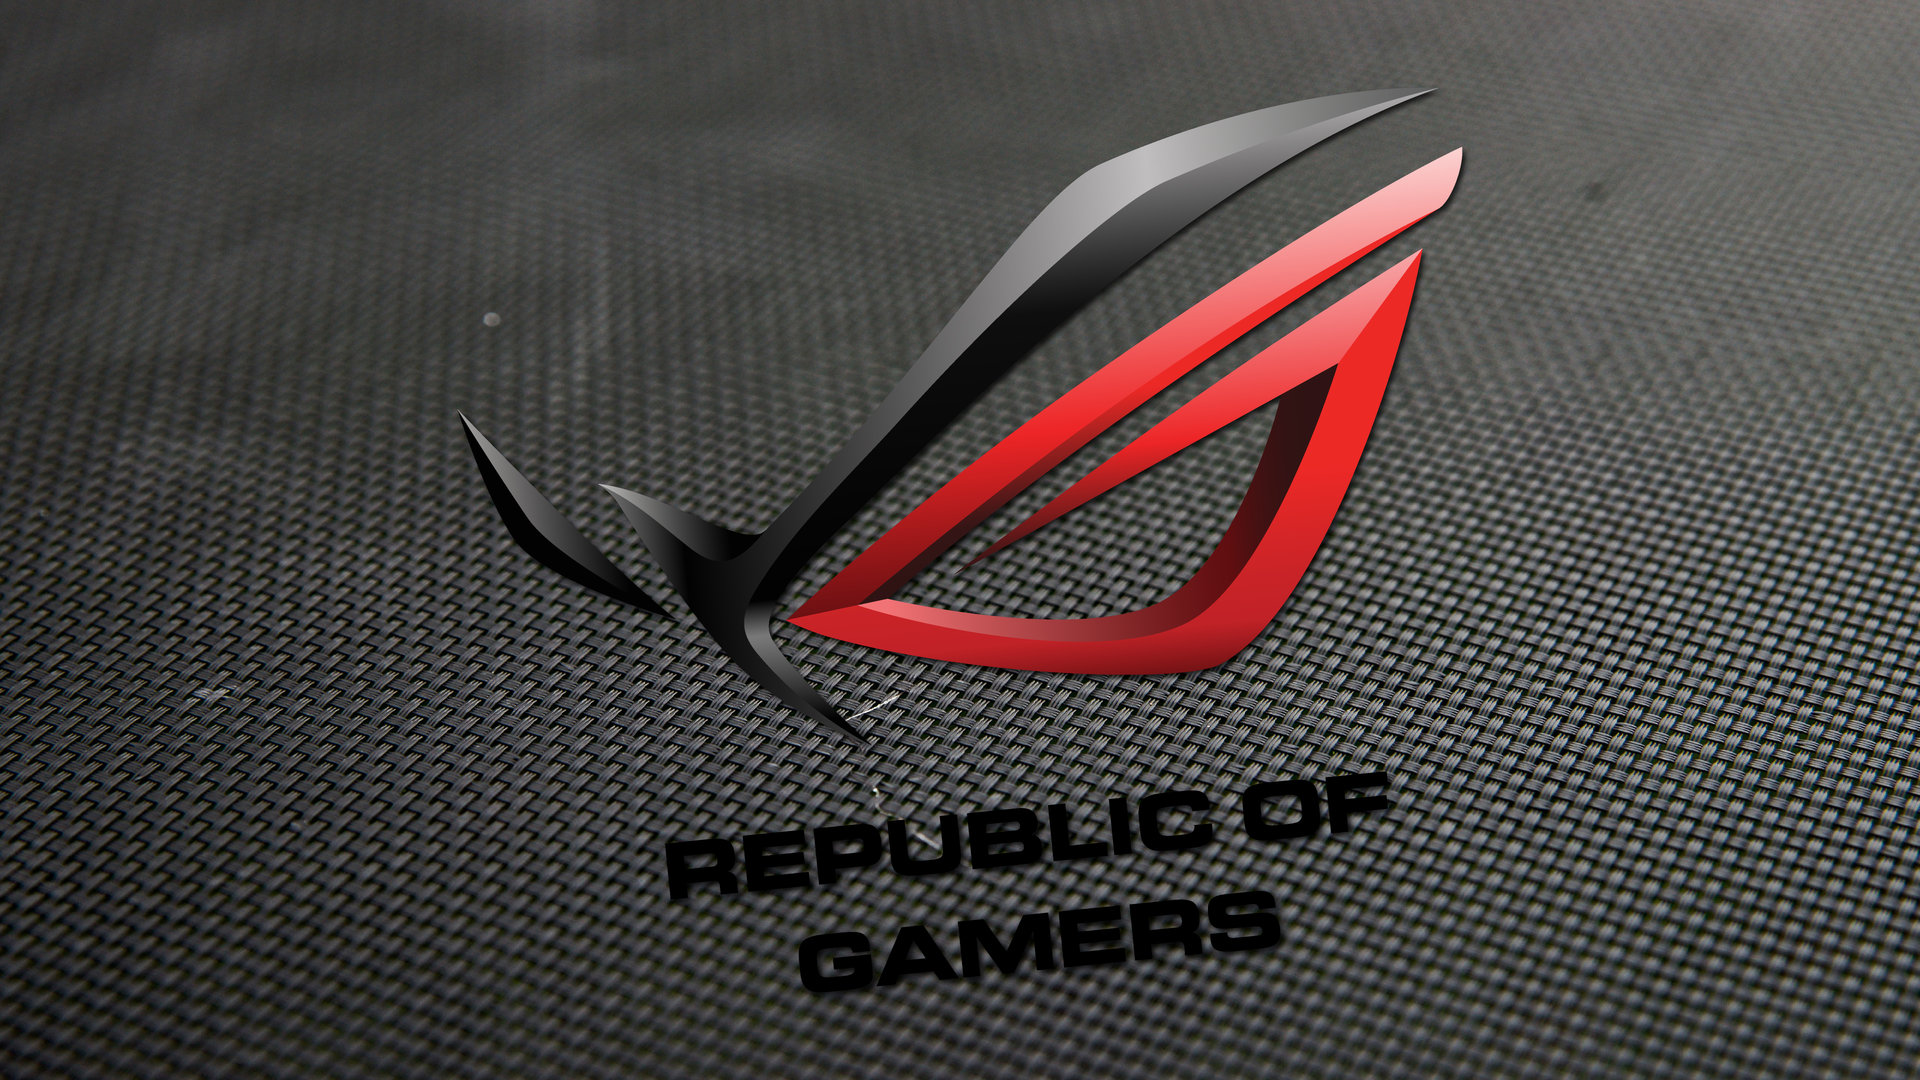 Republic Of Gamers - HD Wallpaper 